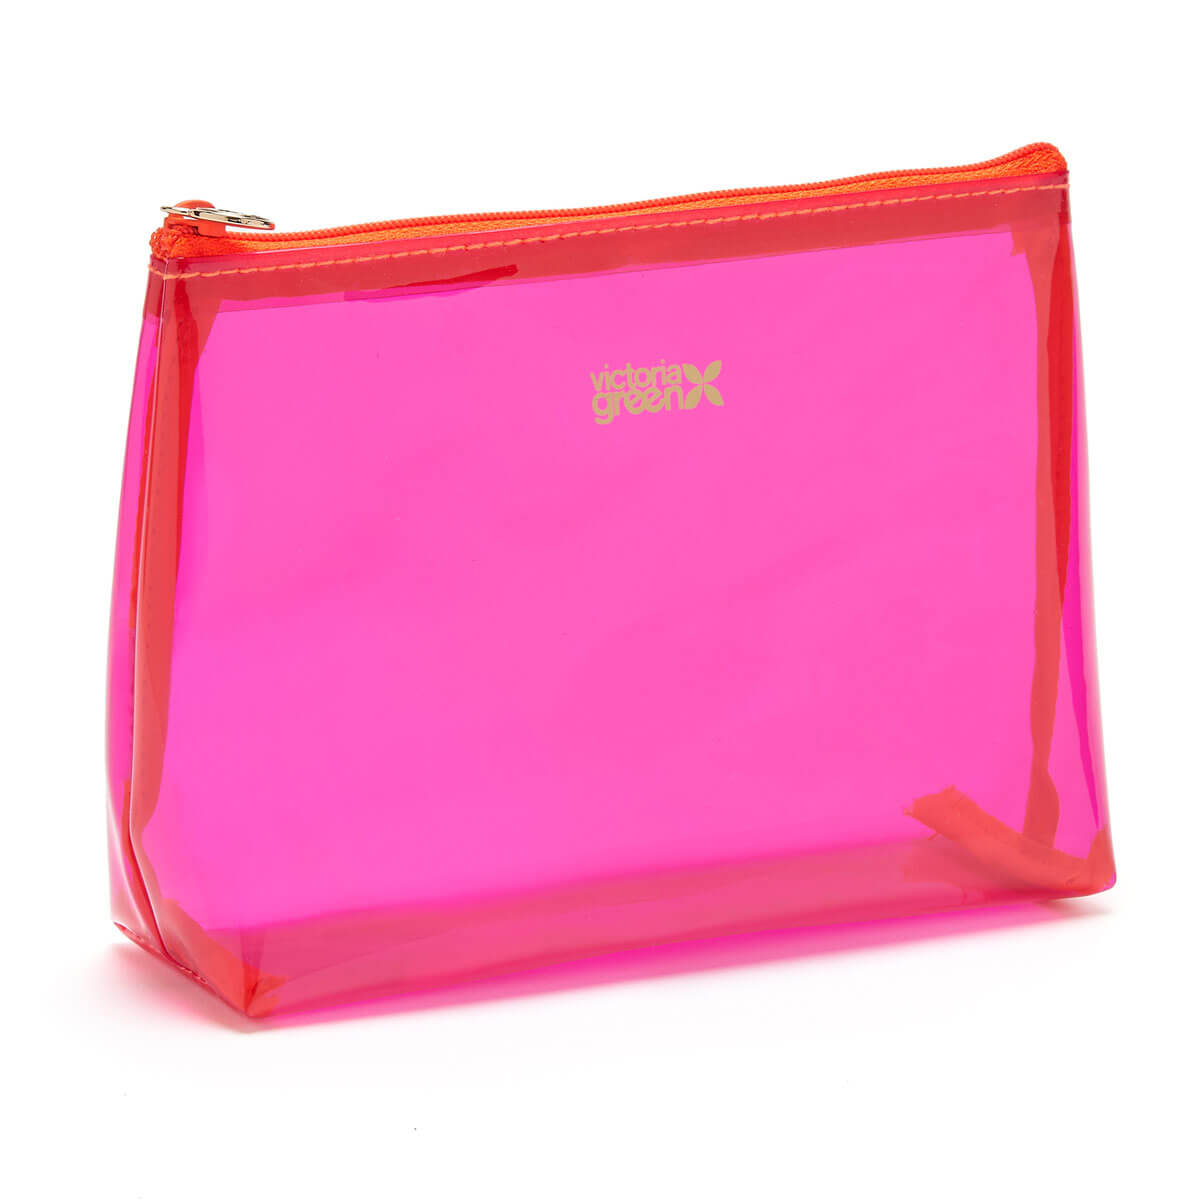 4Pc NEW Victoria’s Secret Y2K Cosmetic Makeup Bags Clear Plastic Beach Swim  Pool